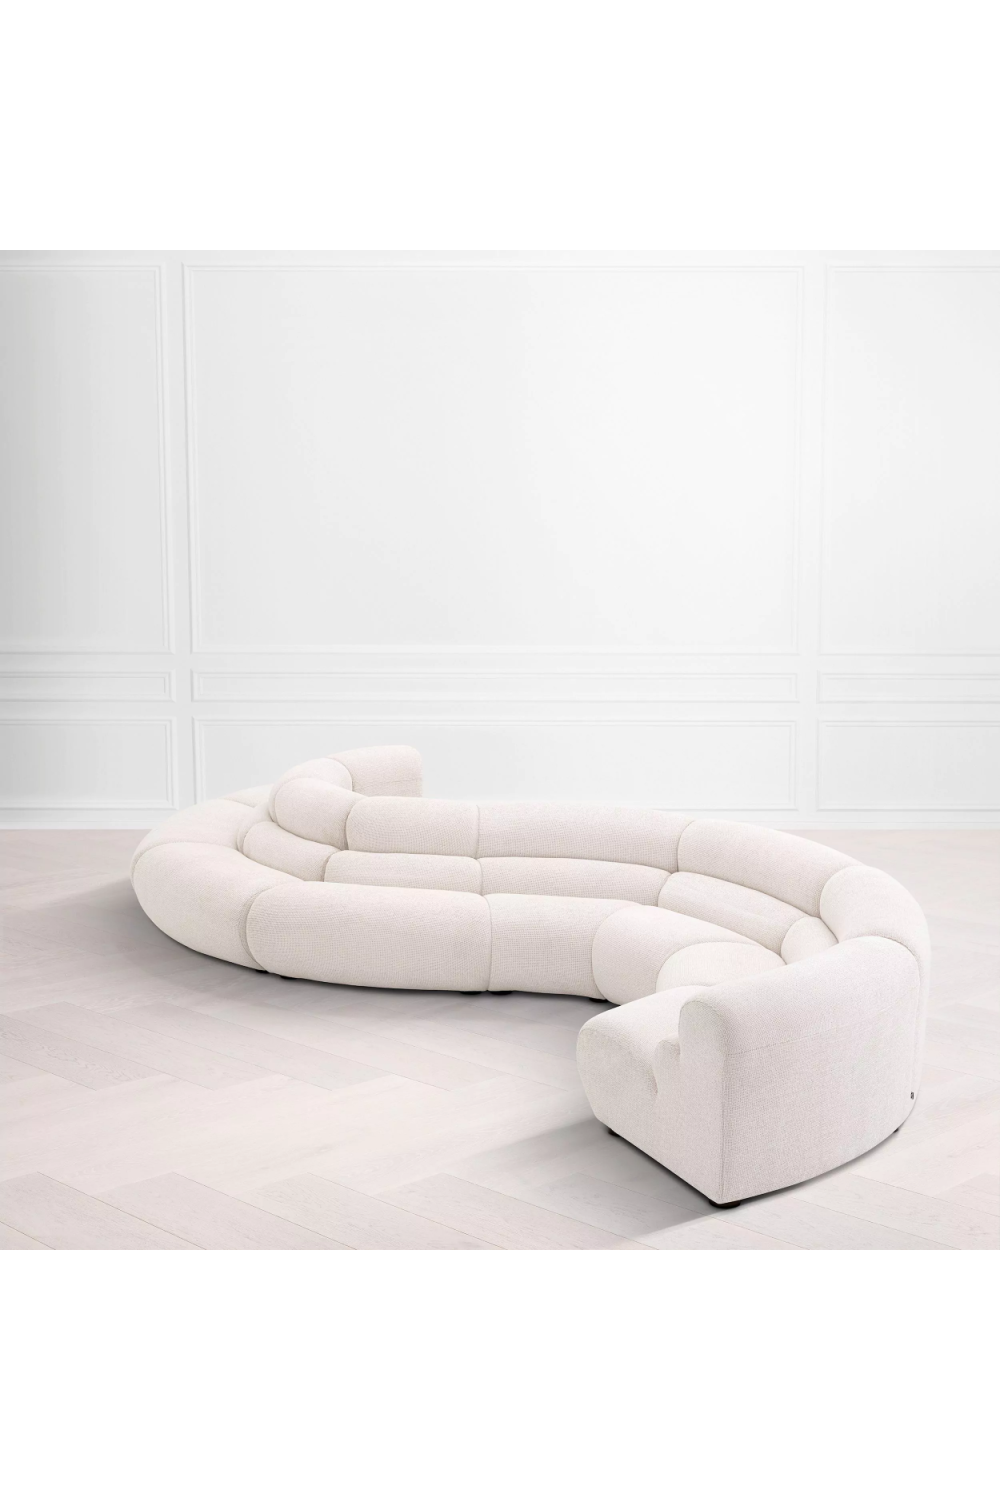 Off-White Modular Sofa | Eichholtz Lindau | Oroa.com